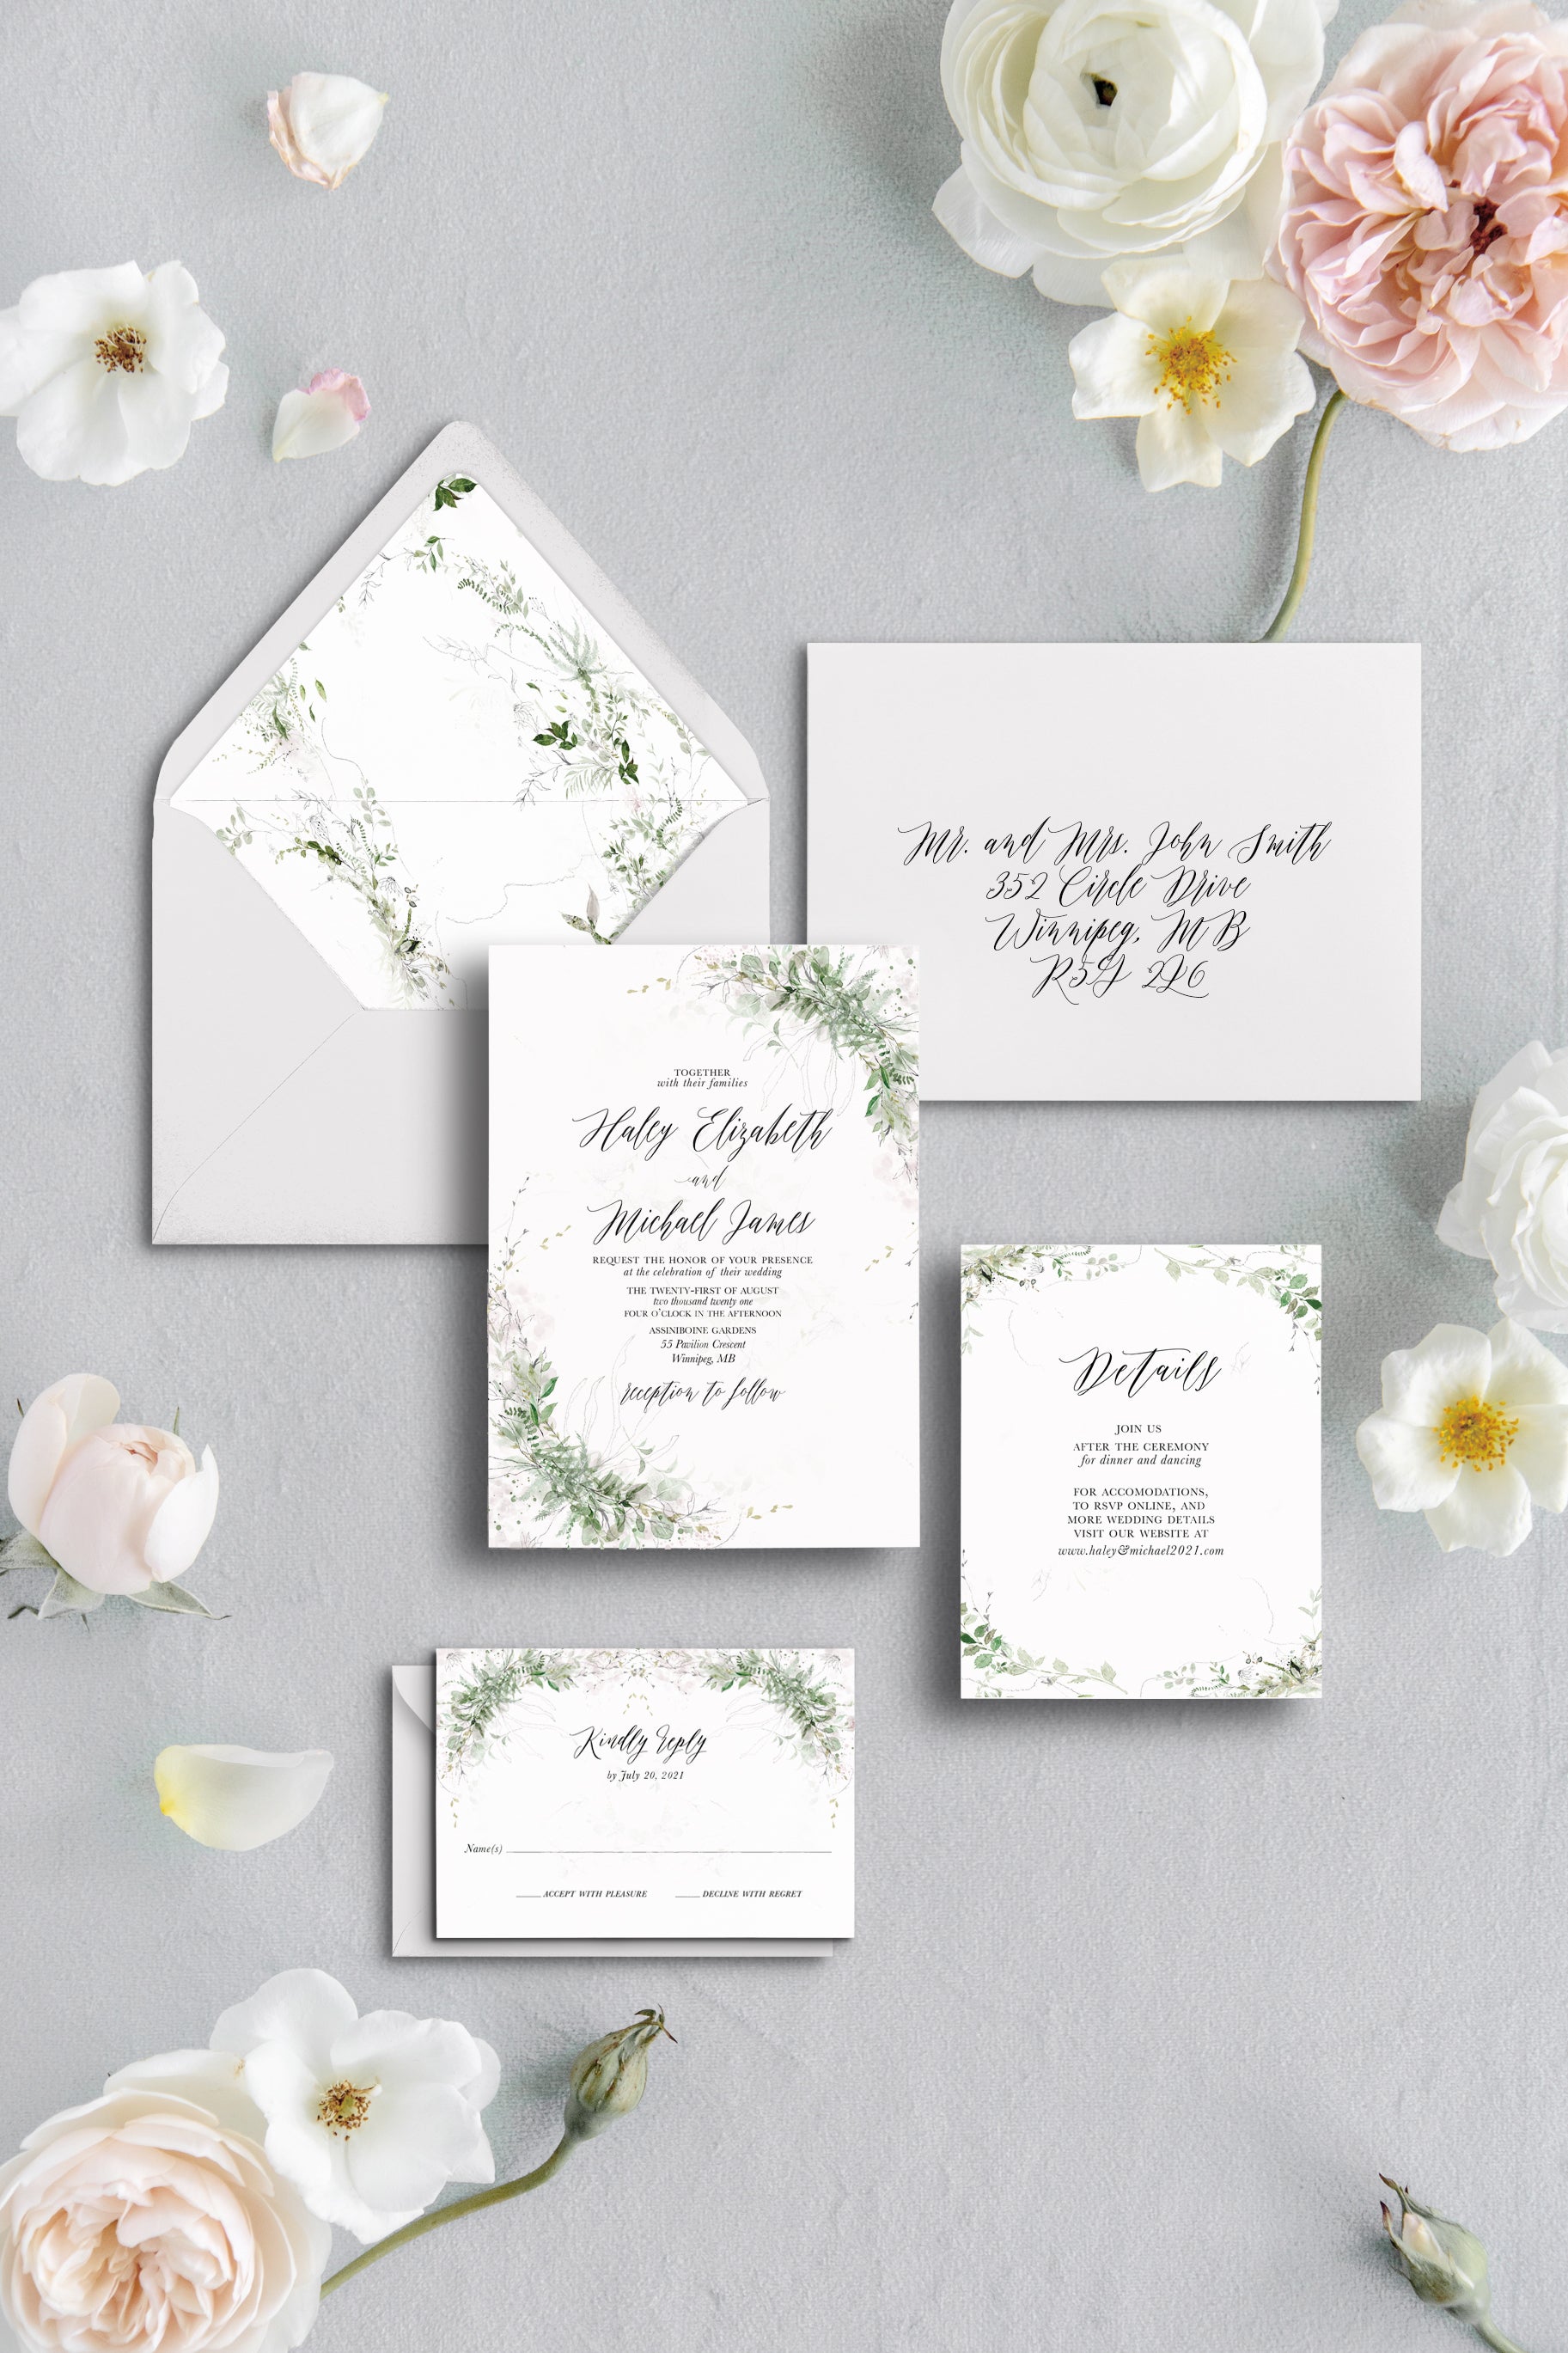 Rustic Wedding Invitation, Greenery, Kraft - Cotton Willow Design Co.